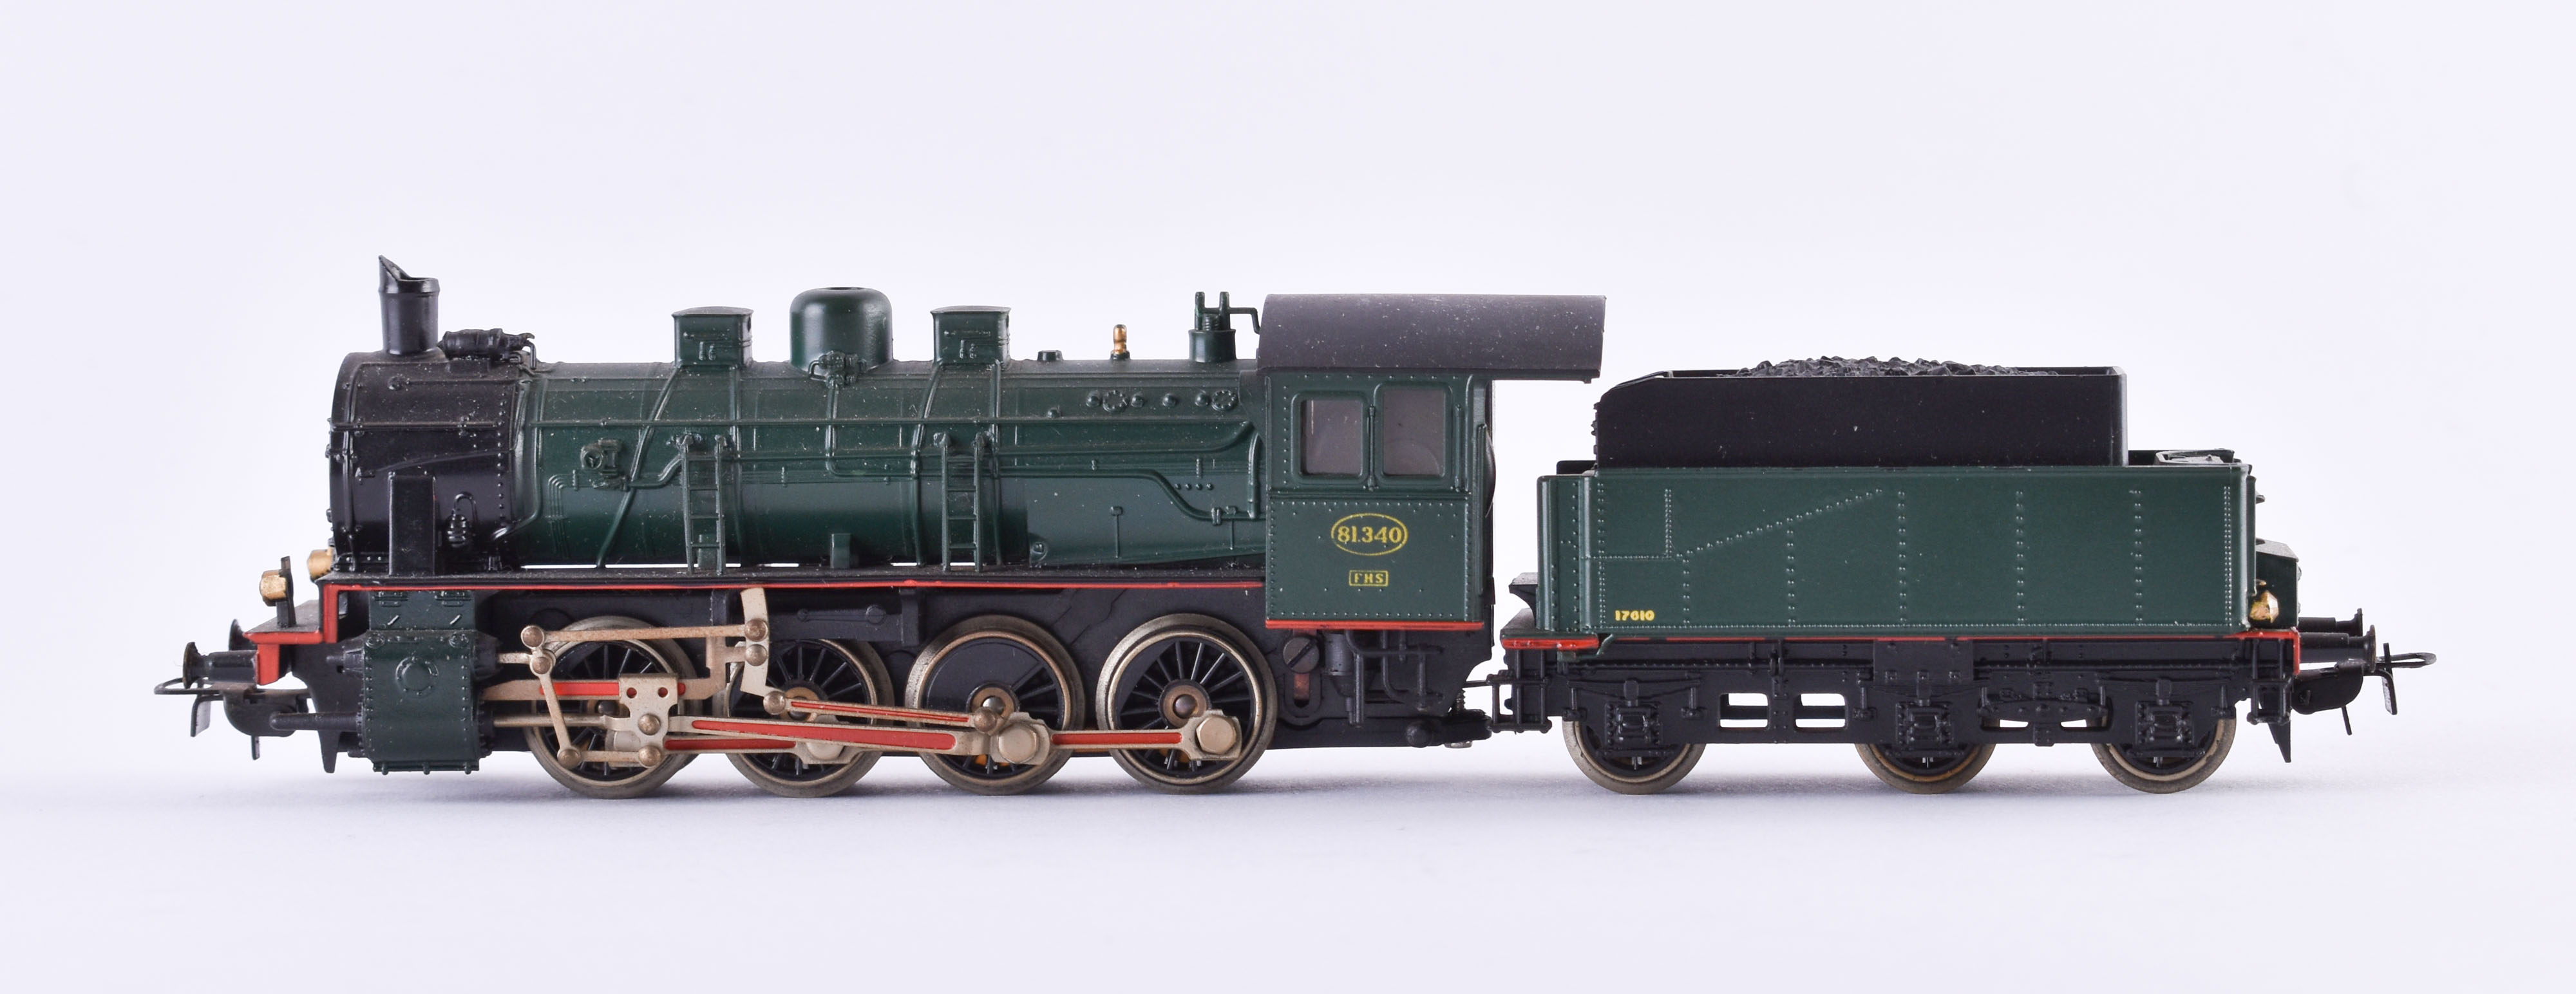 Steam locomotive 81340 with tender 17610 - Märklin - Image 2 of 3